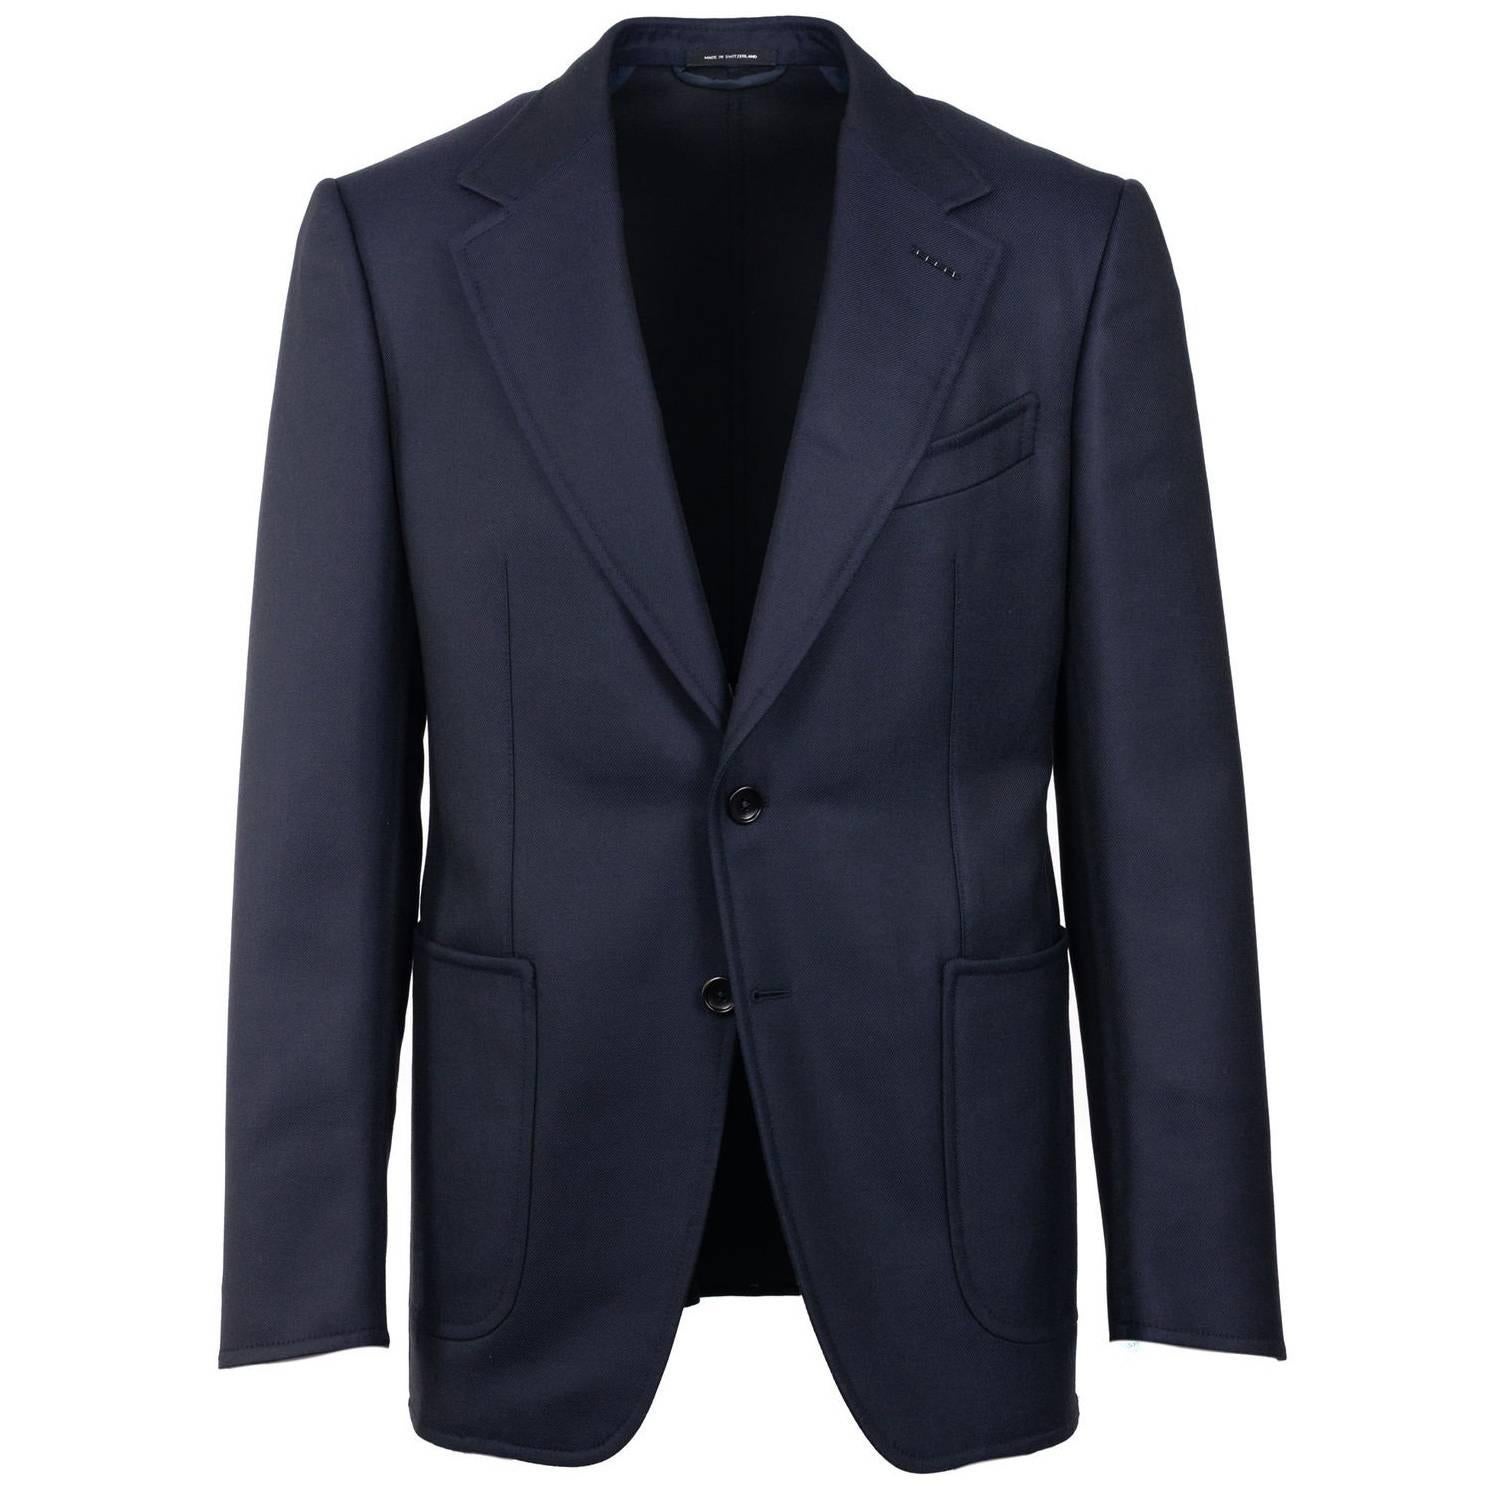 Tom Ford Shelton Navy Wool Blazer Sports Jacket 48R 38R ret $3750 For Sale